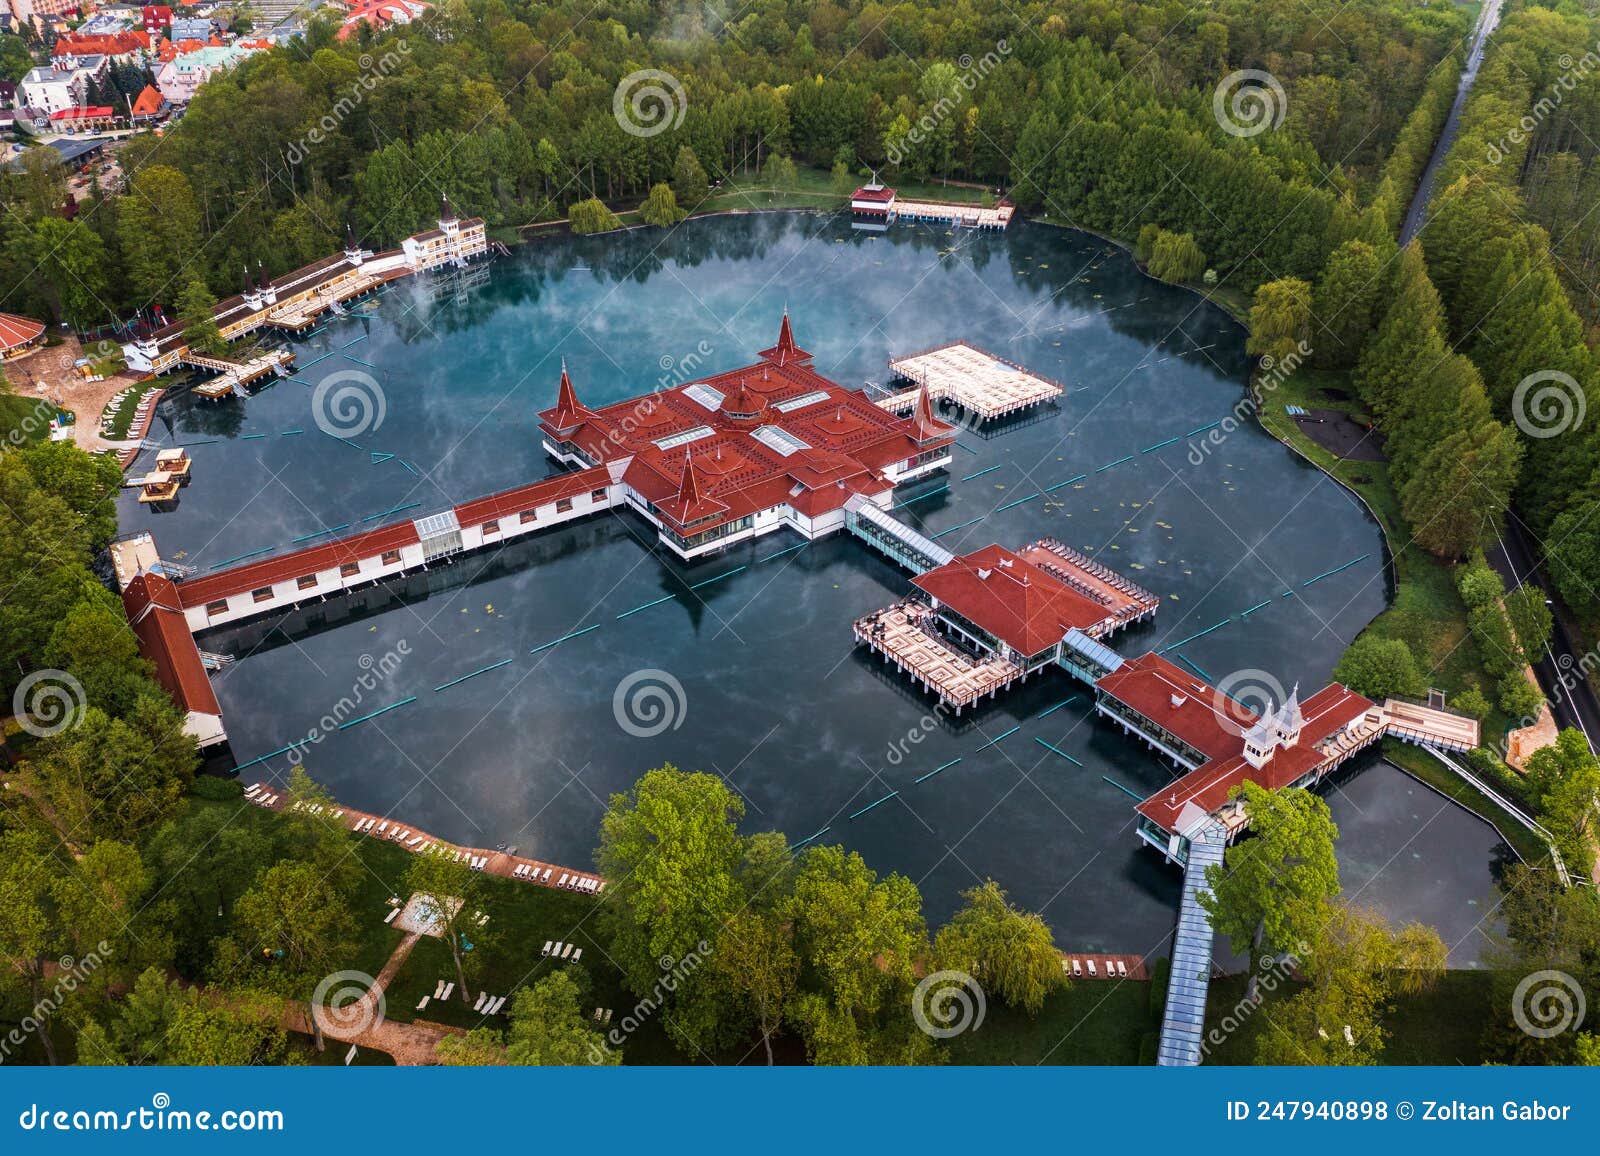 heviz, hungary - aerial view of lake heviz, the worldÃ¢â¬â¢s second-largest thermal lake and holiday spa destination at zala county